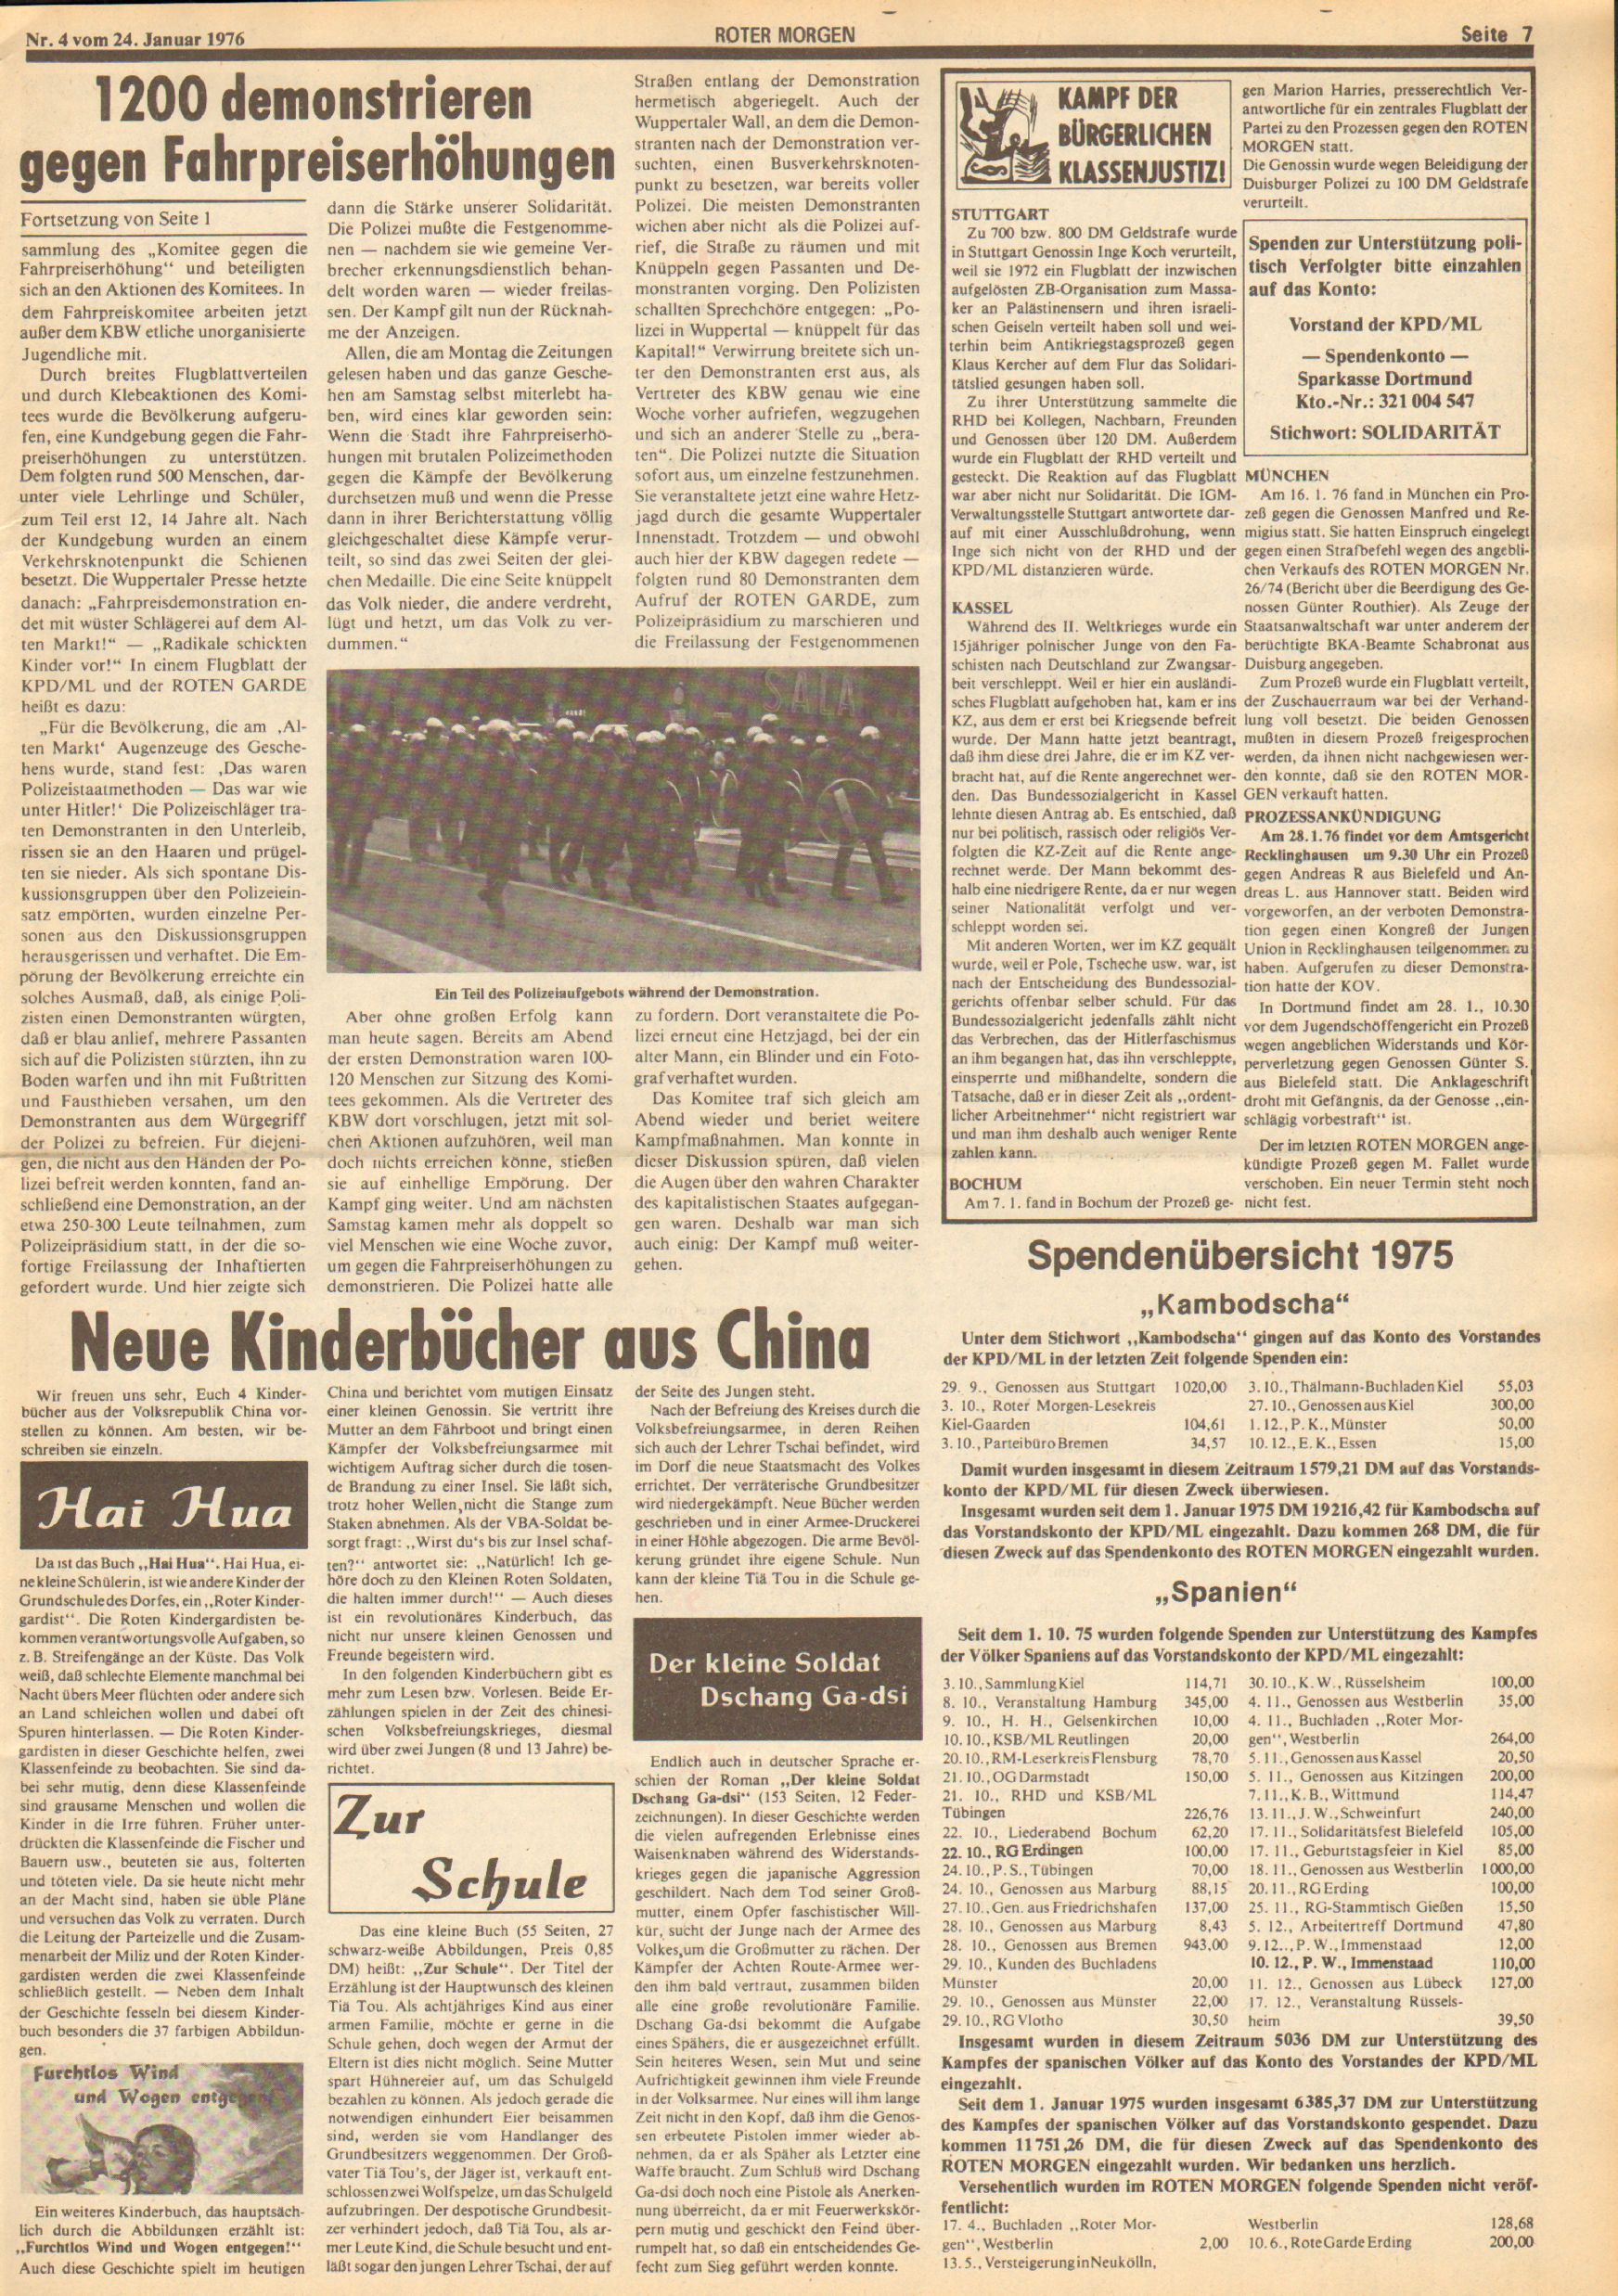 Roter Morgen, 10. Jg., 24. Januar 1976, Nr. 4, Seite 7